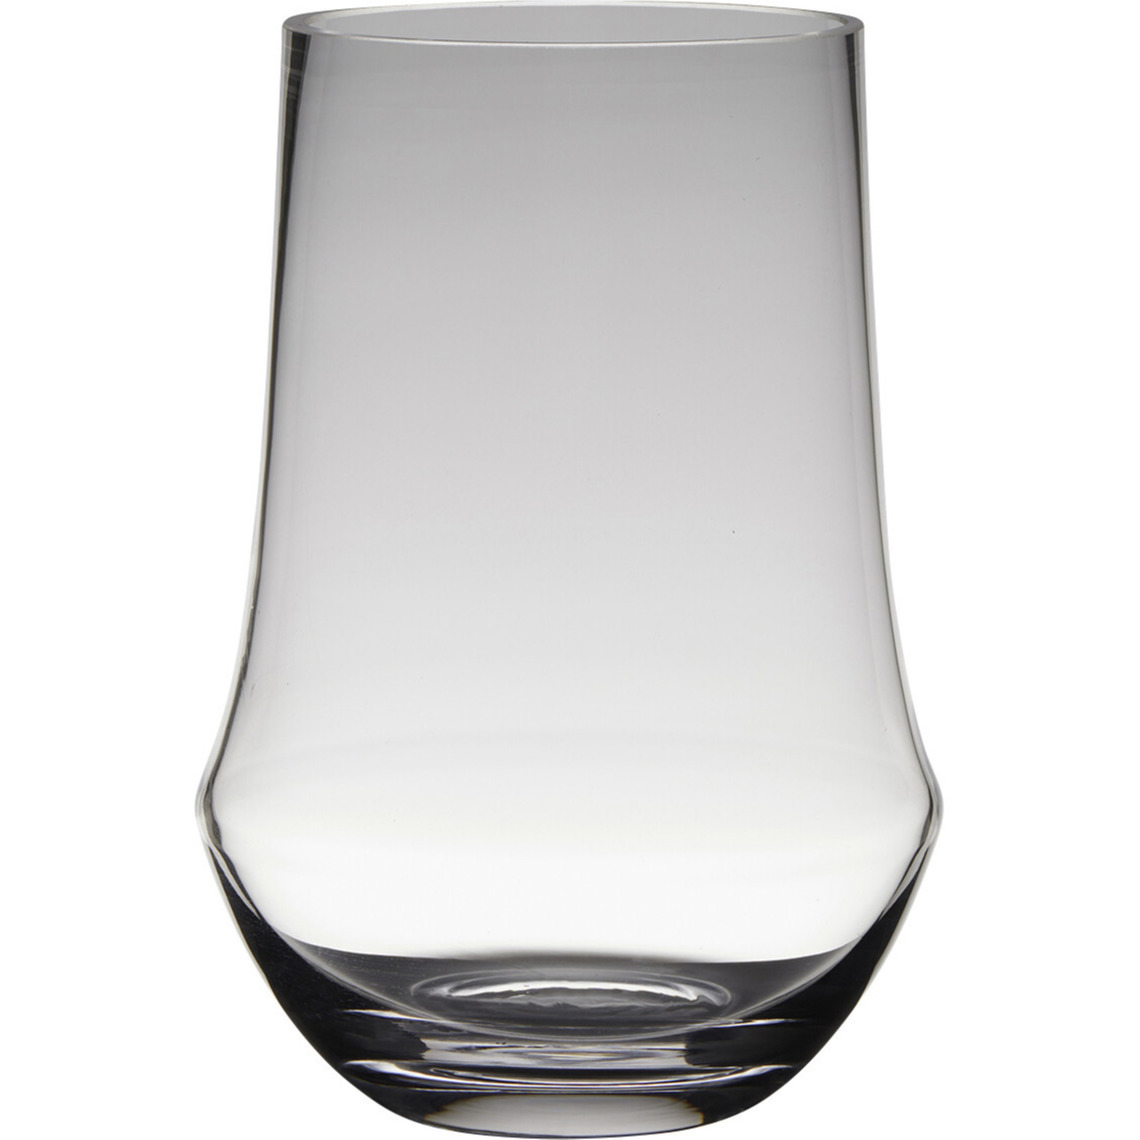 Merkloos Transparante luxe vaas/vazen van glas 25 x 17 cm -